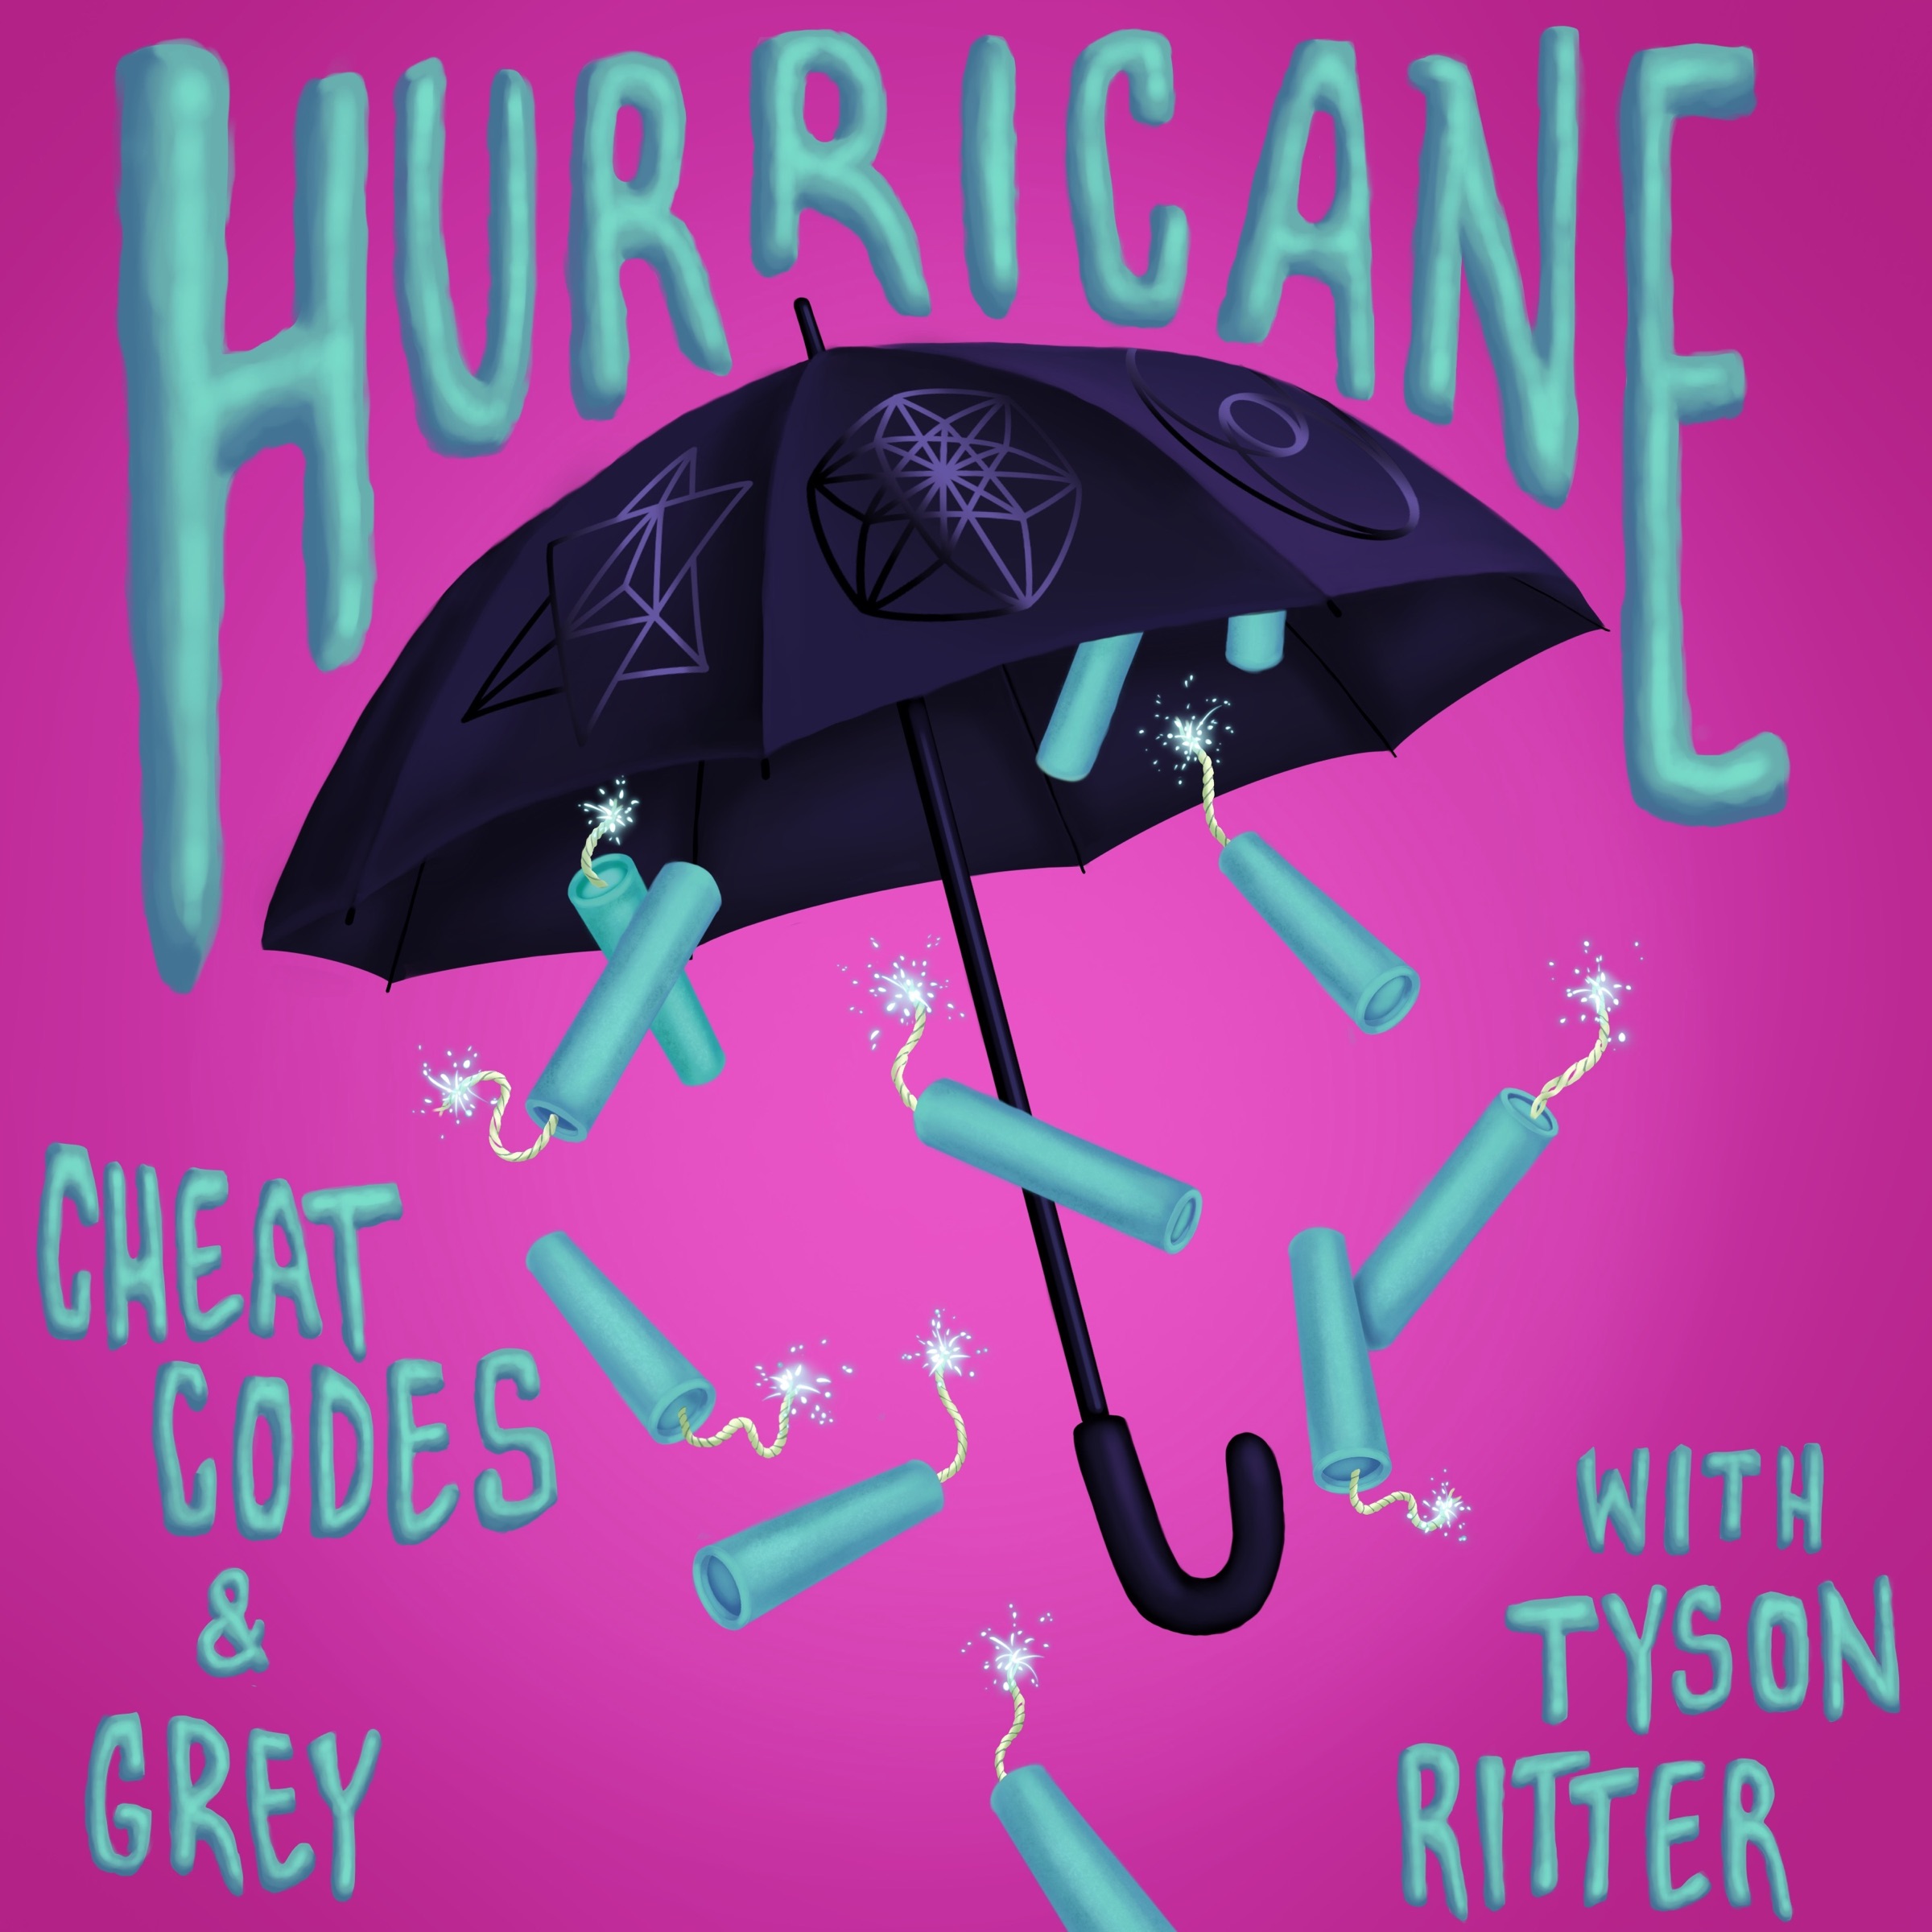 Cheat Codes, Grey, & Tyson Ritter — Hurricane cover artwork